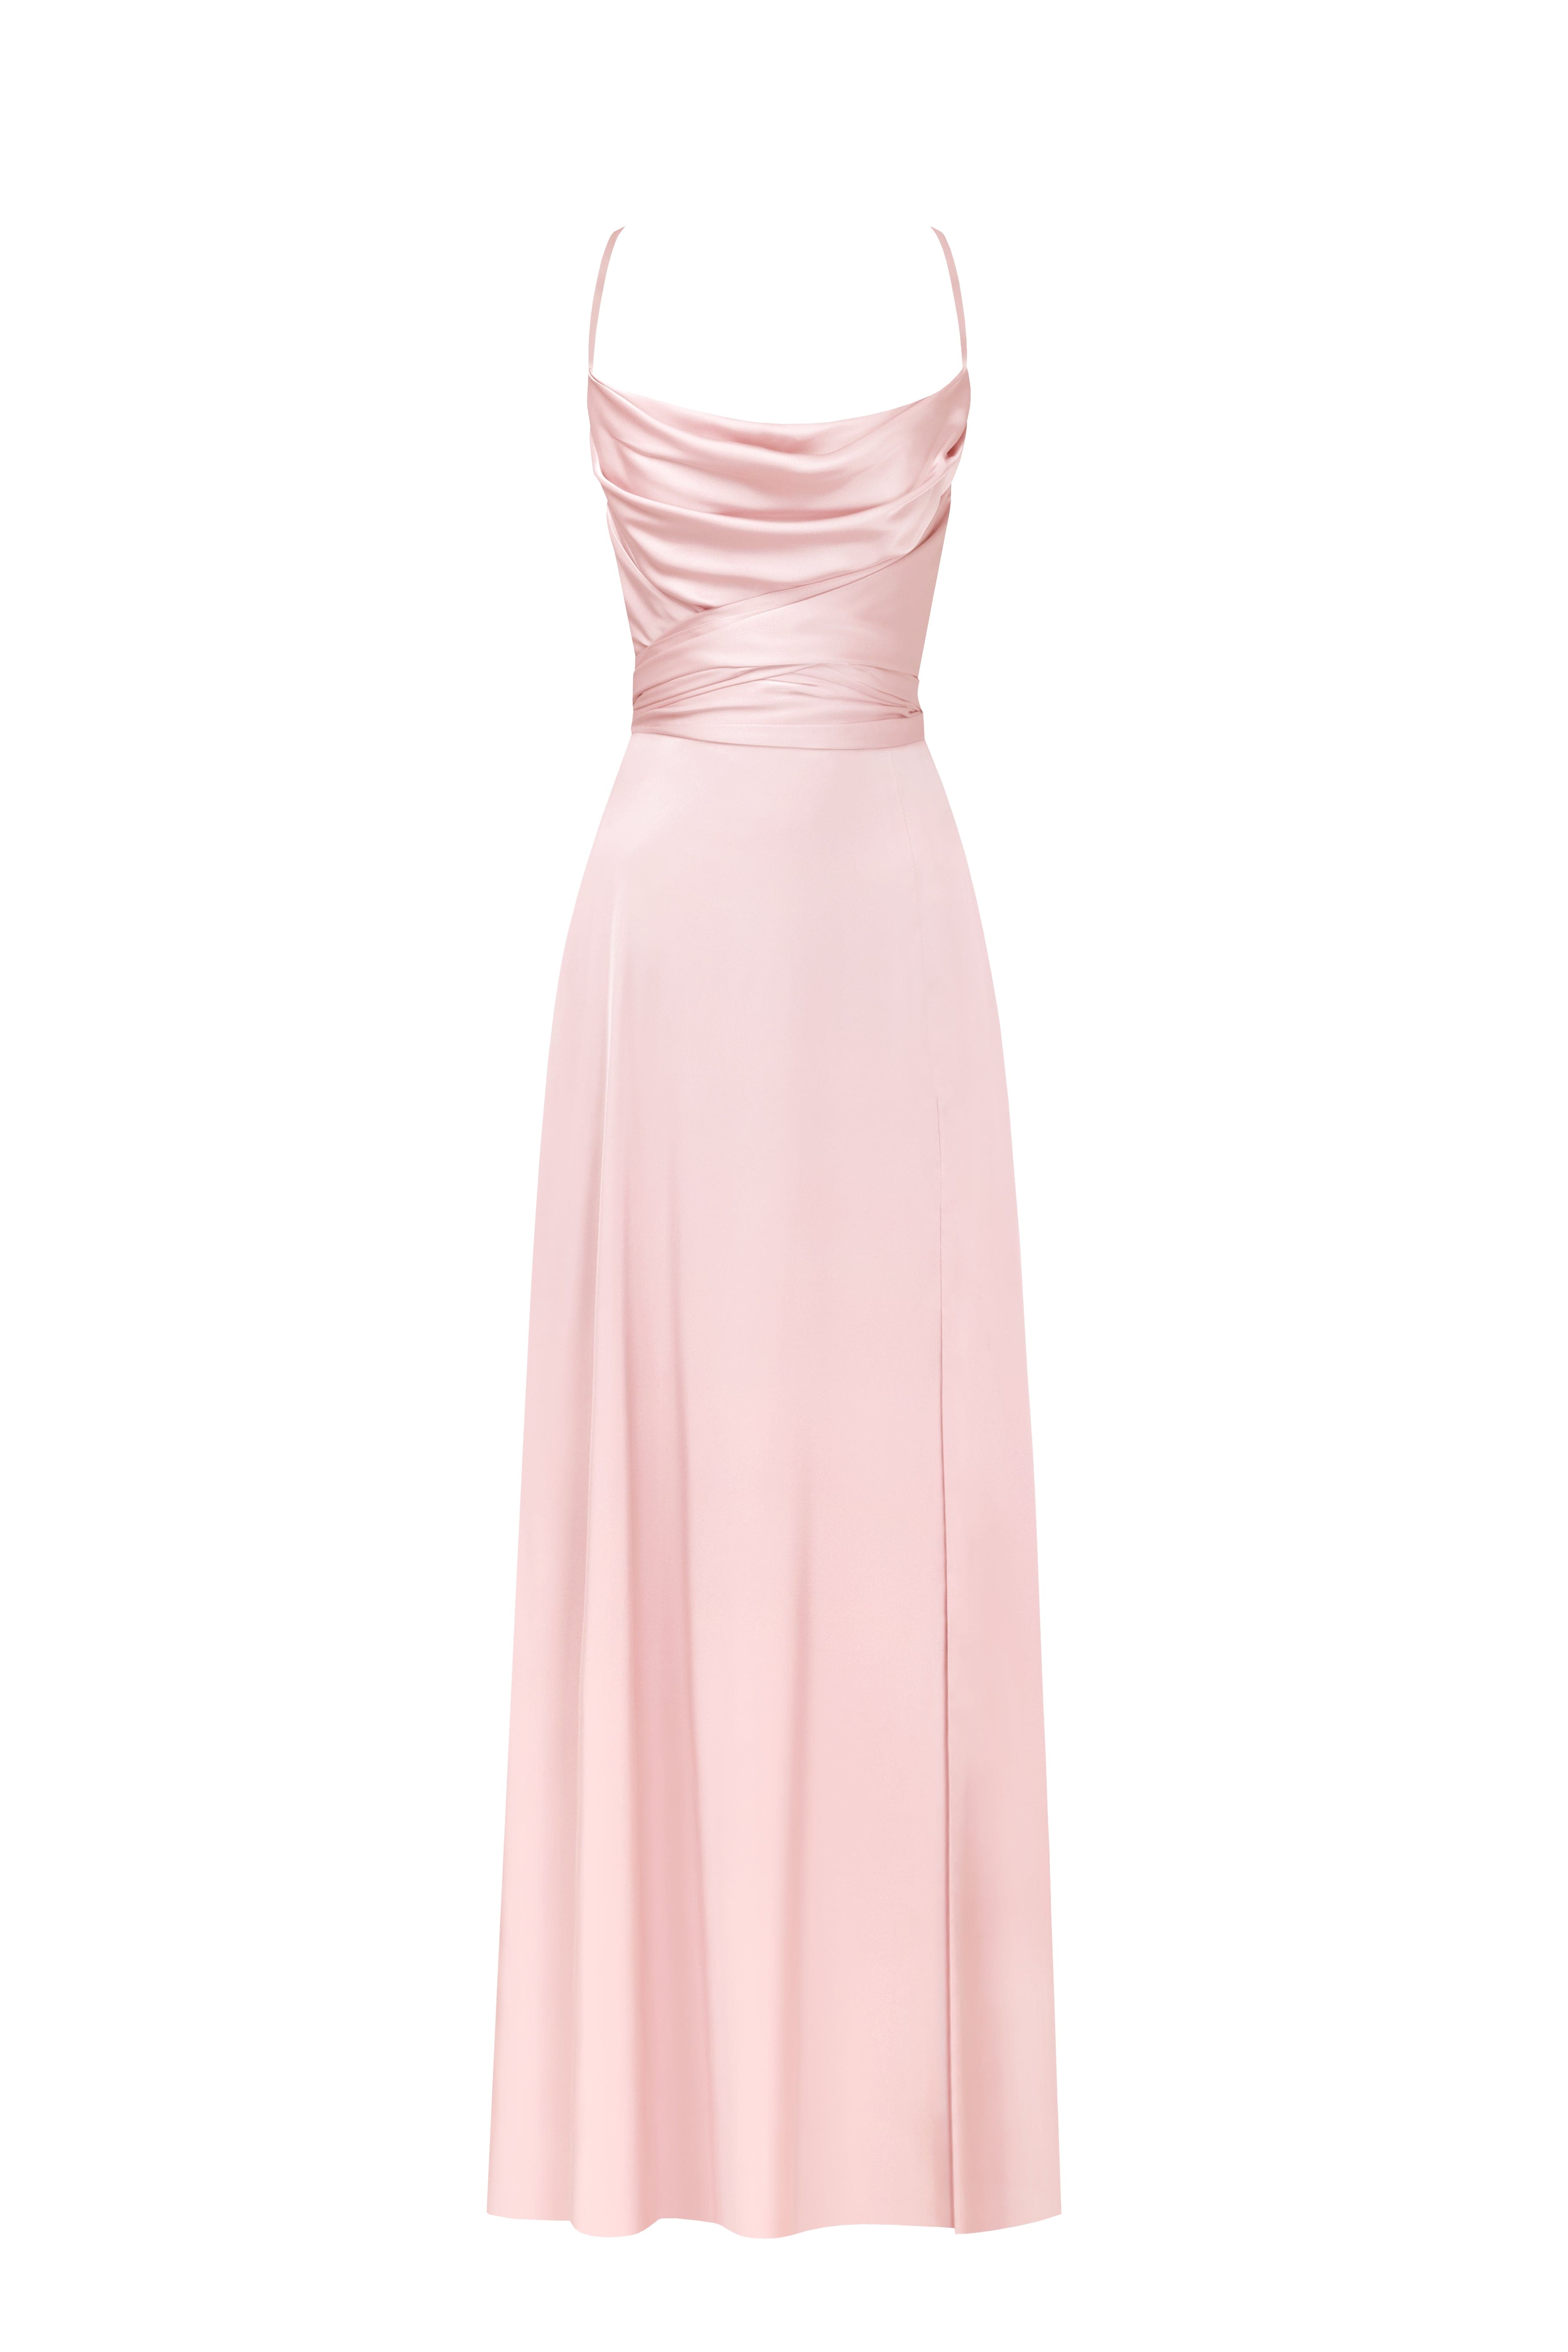 Boudoir misty rose silk slip dress Milla Dresses - USA, Worldwide delivery